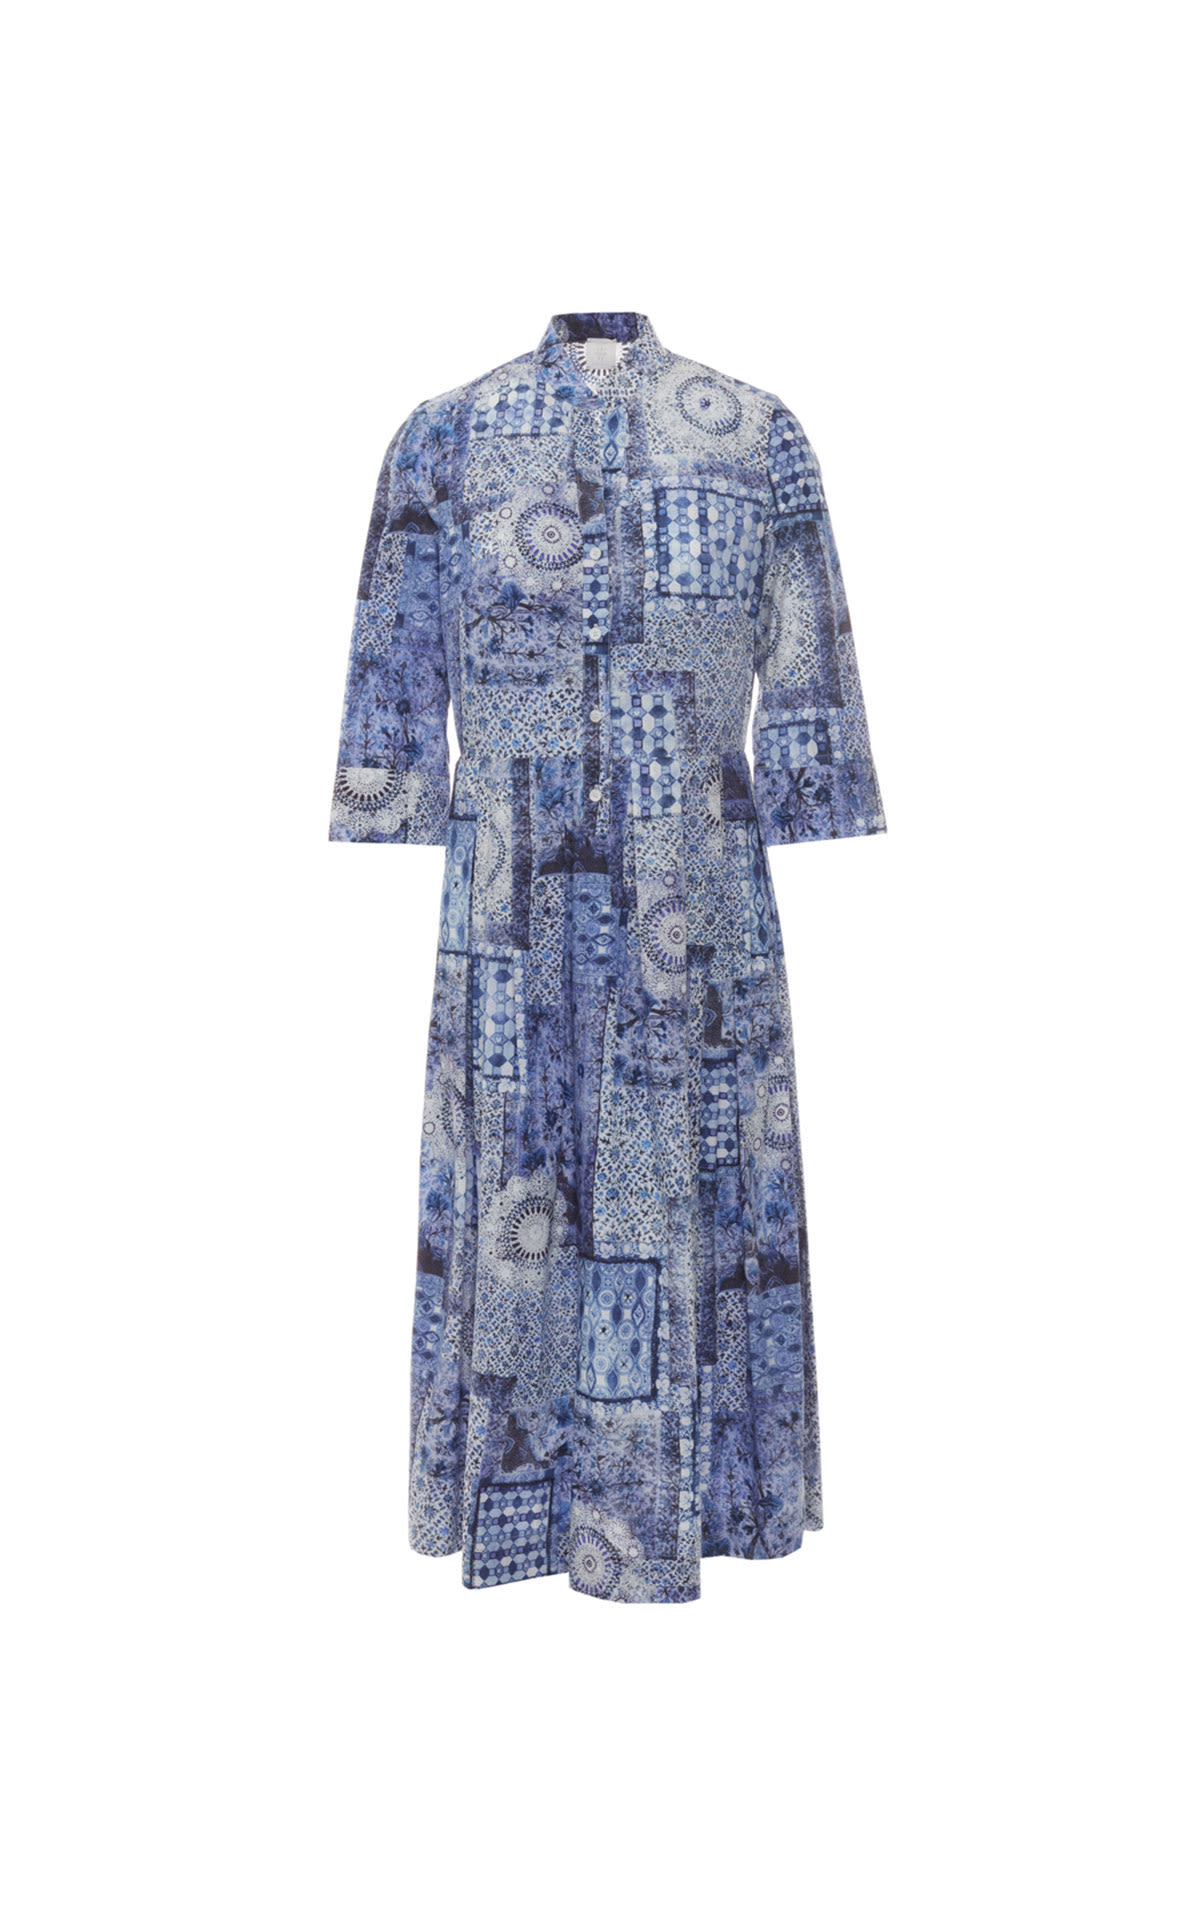 Eleventy Long pattern dress from Bicester Village